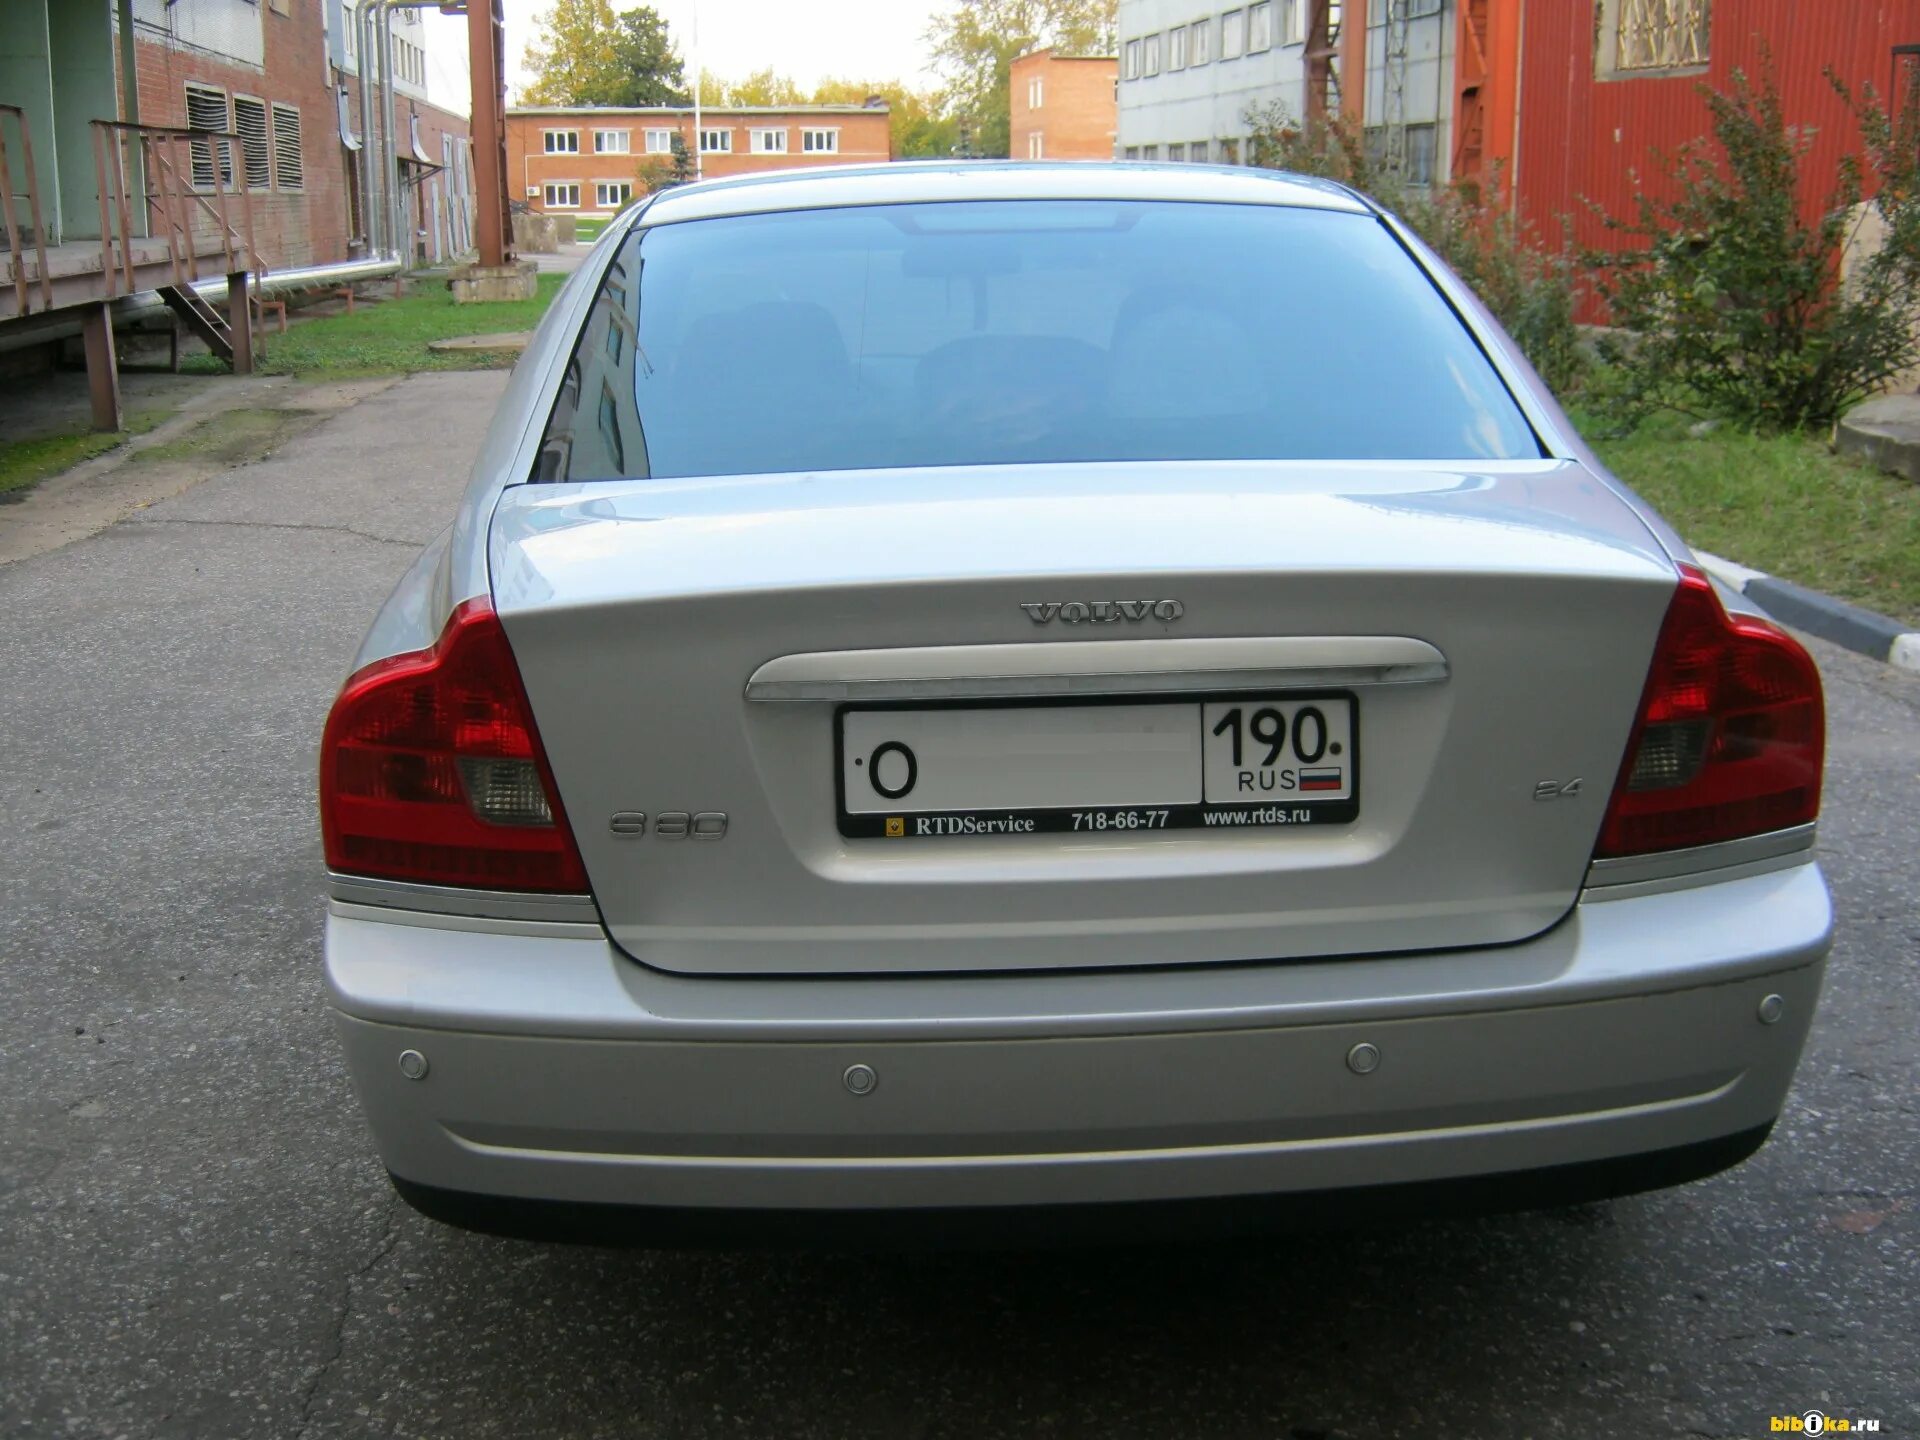 Volvo s80 2005. Вольво с 80 2005 года. Производитель Volvo № производителя 31346531. Volvo s80 2005 зеленая тюнинг.